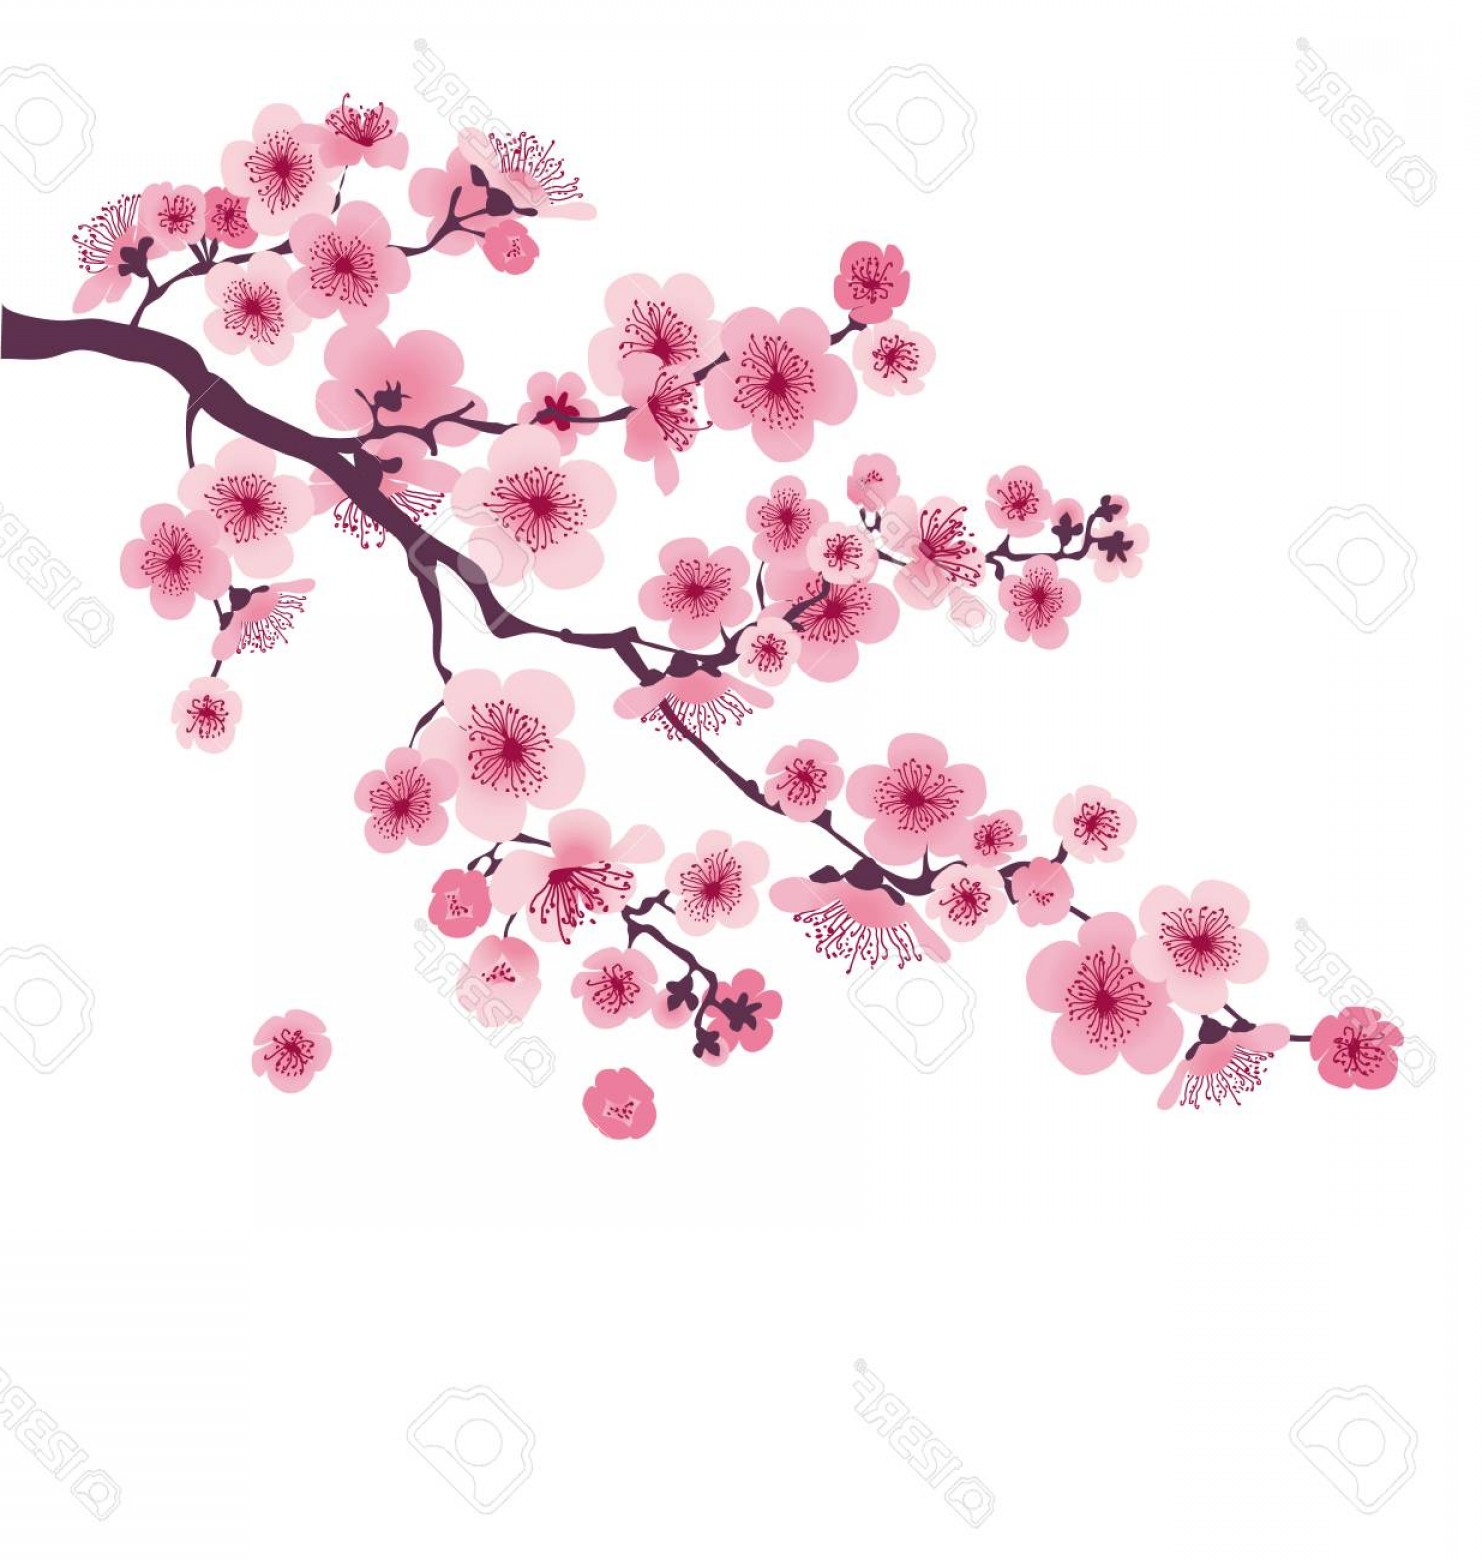 Cherry blossom vector.